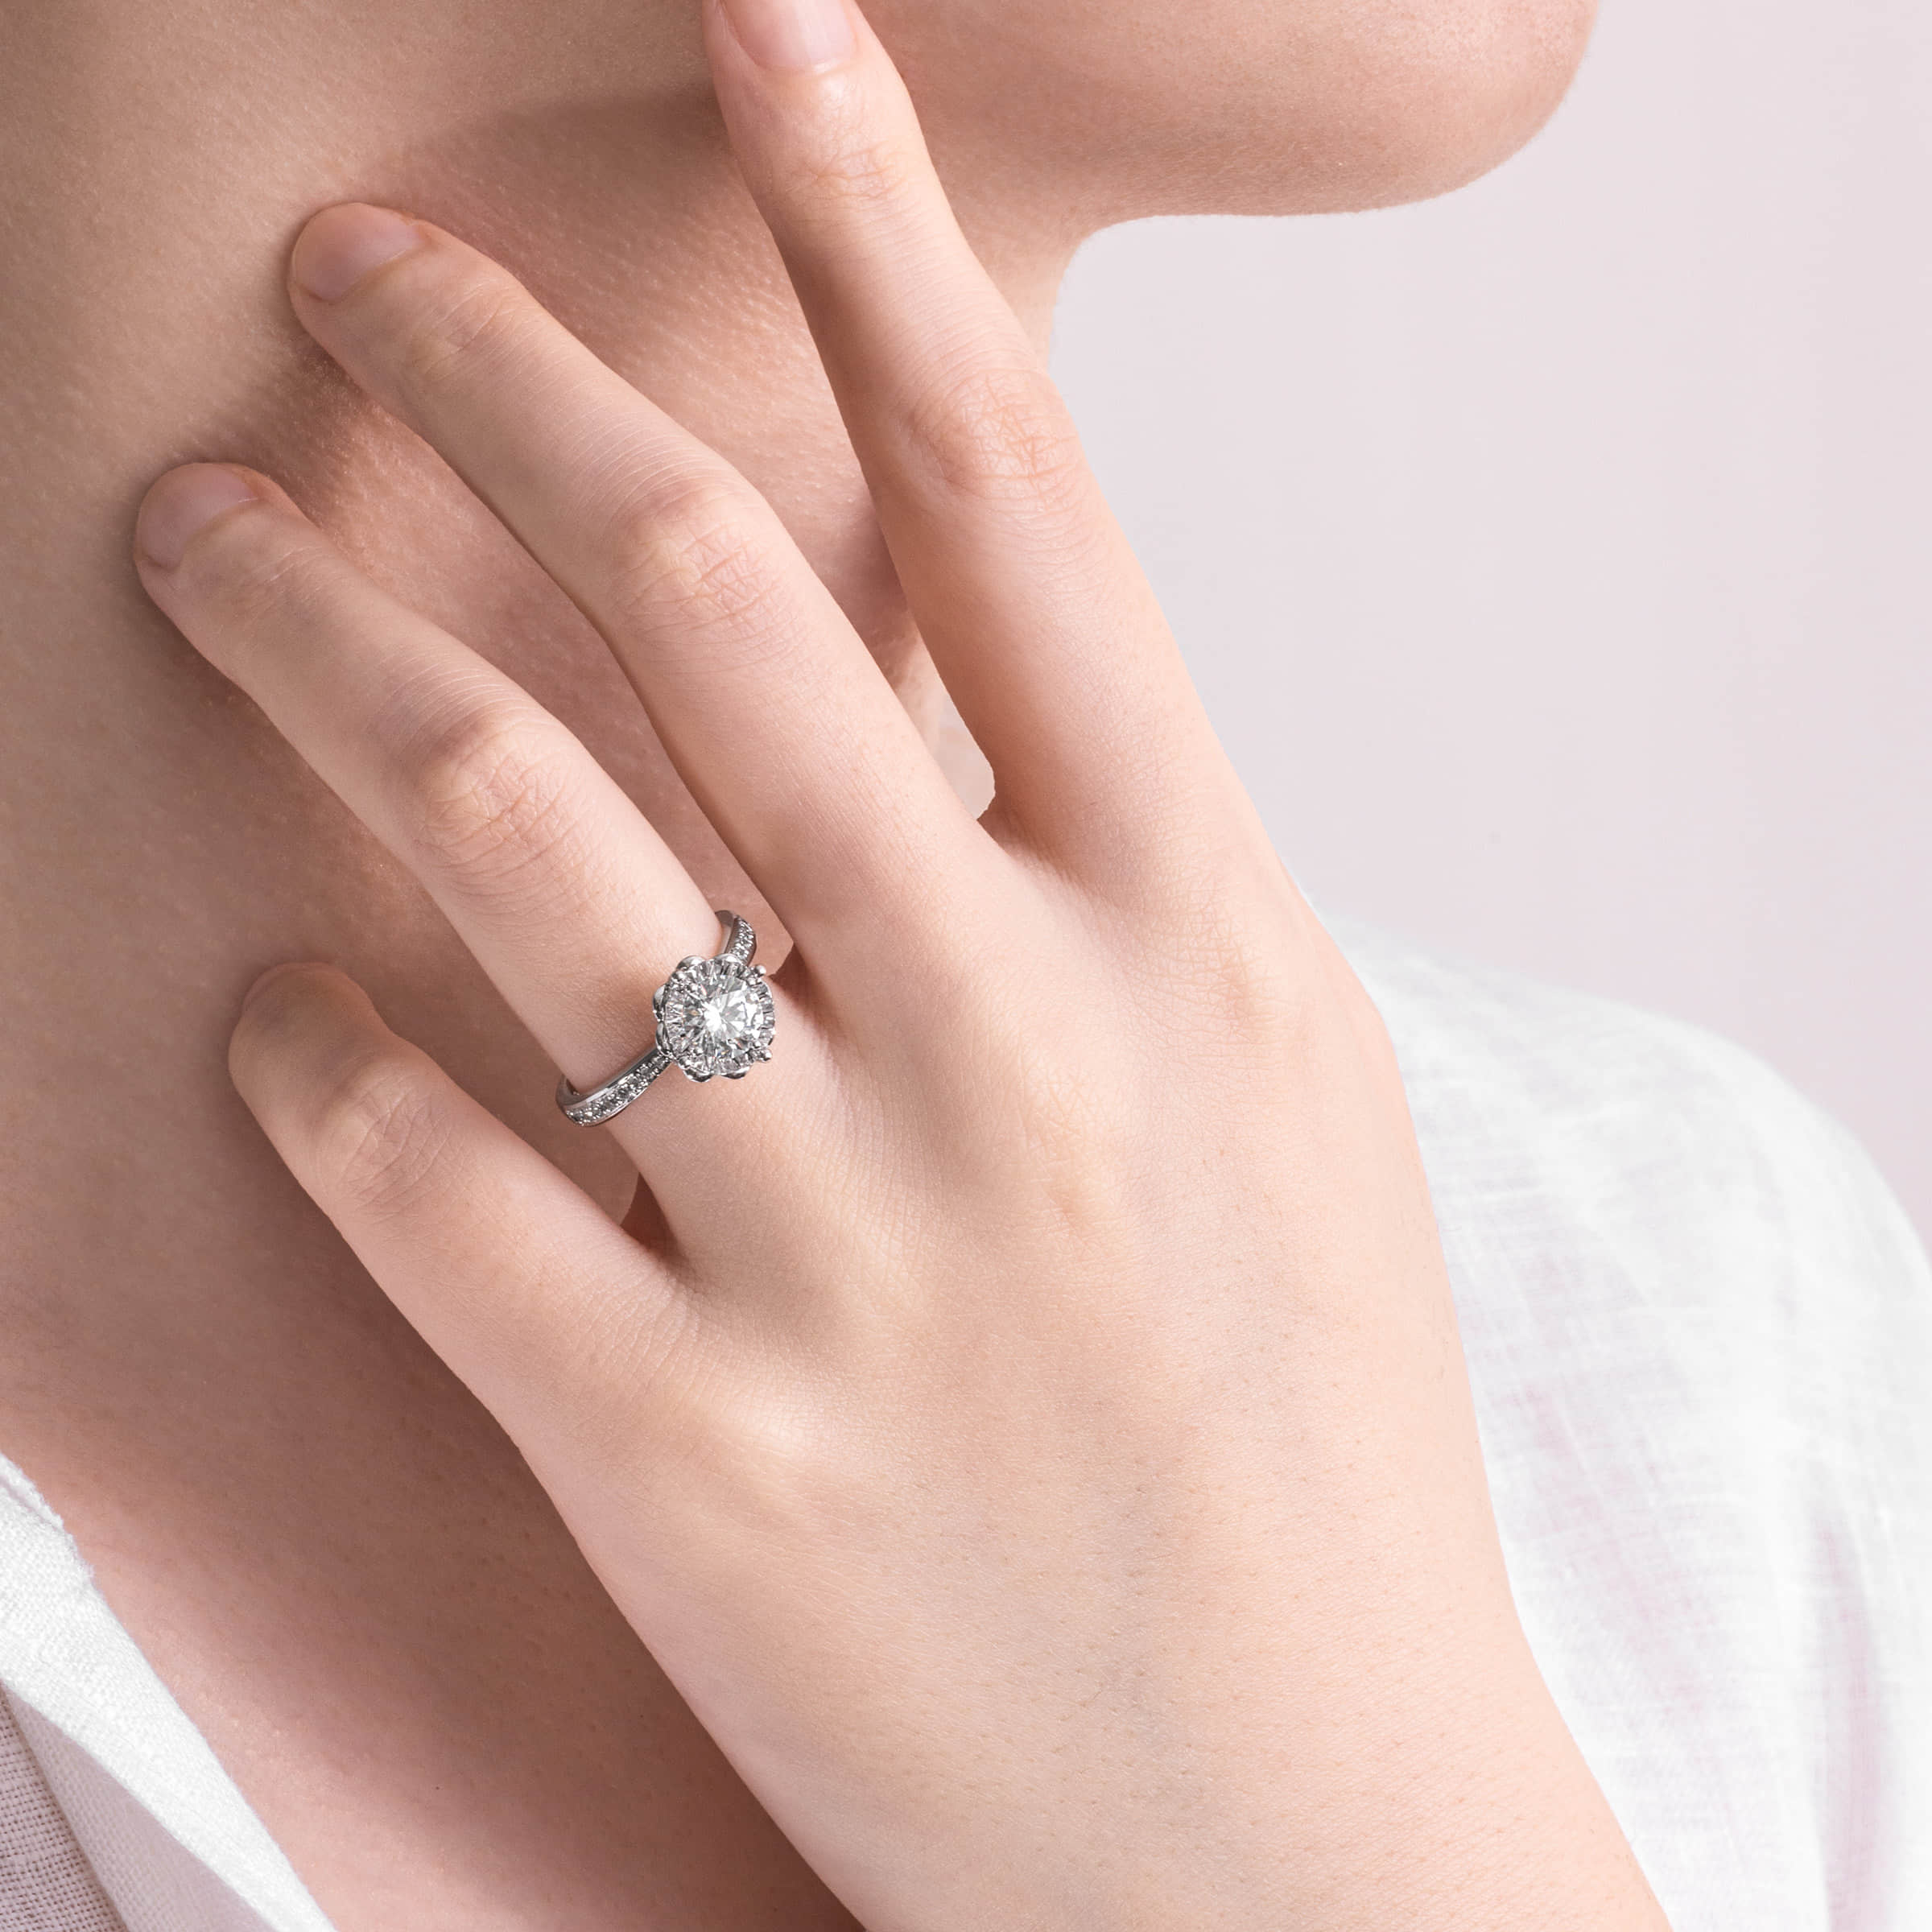 Darry Ring flower shaped engagement ring on finger